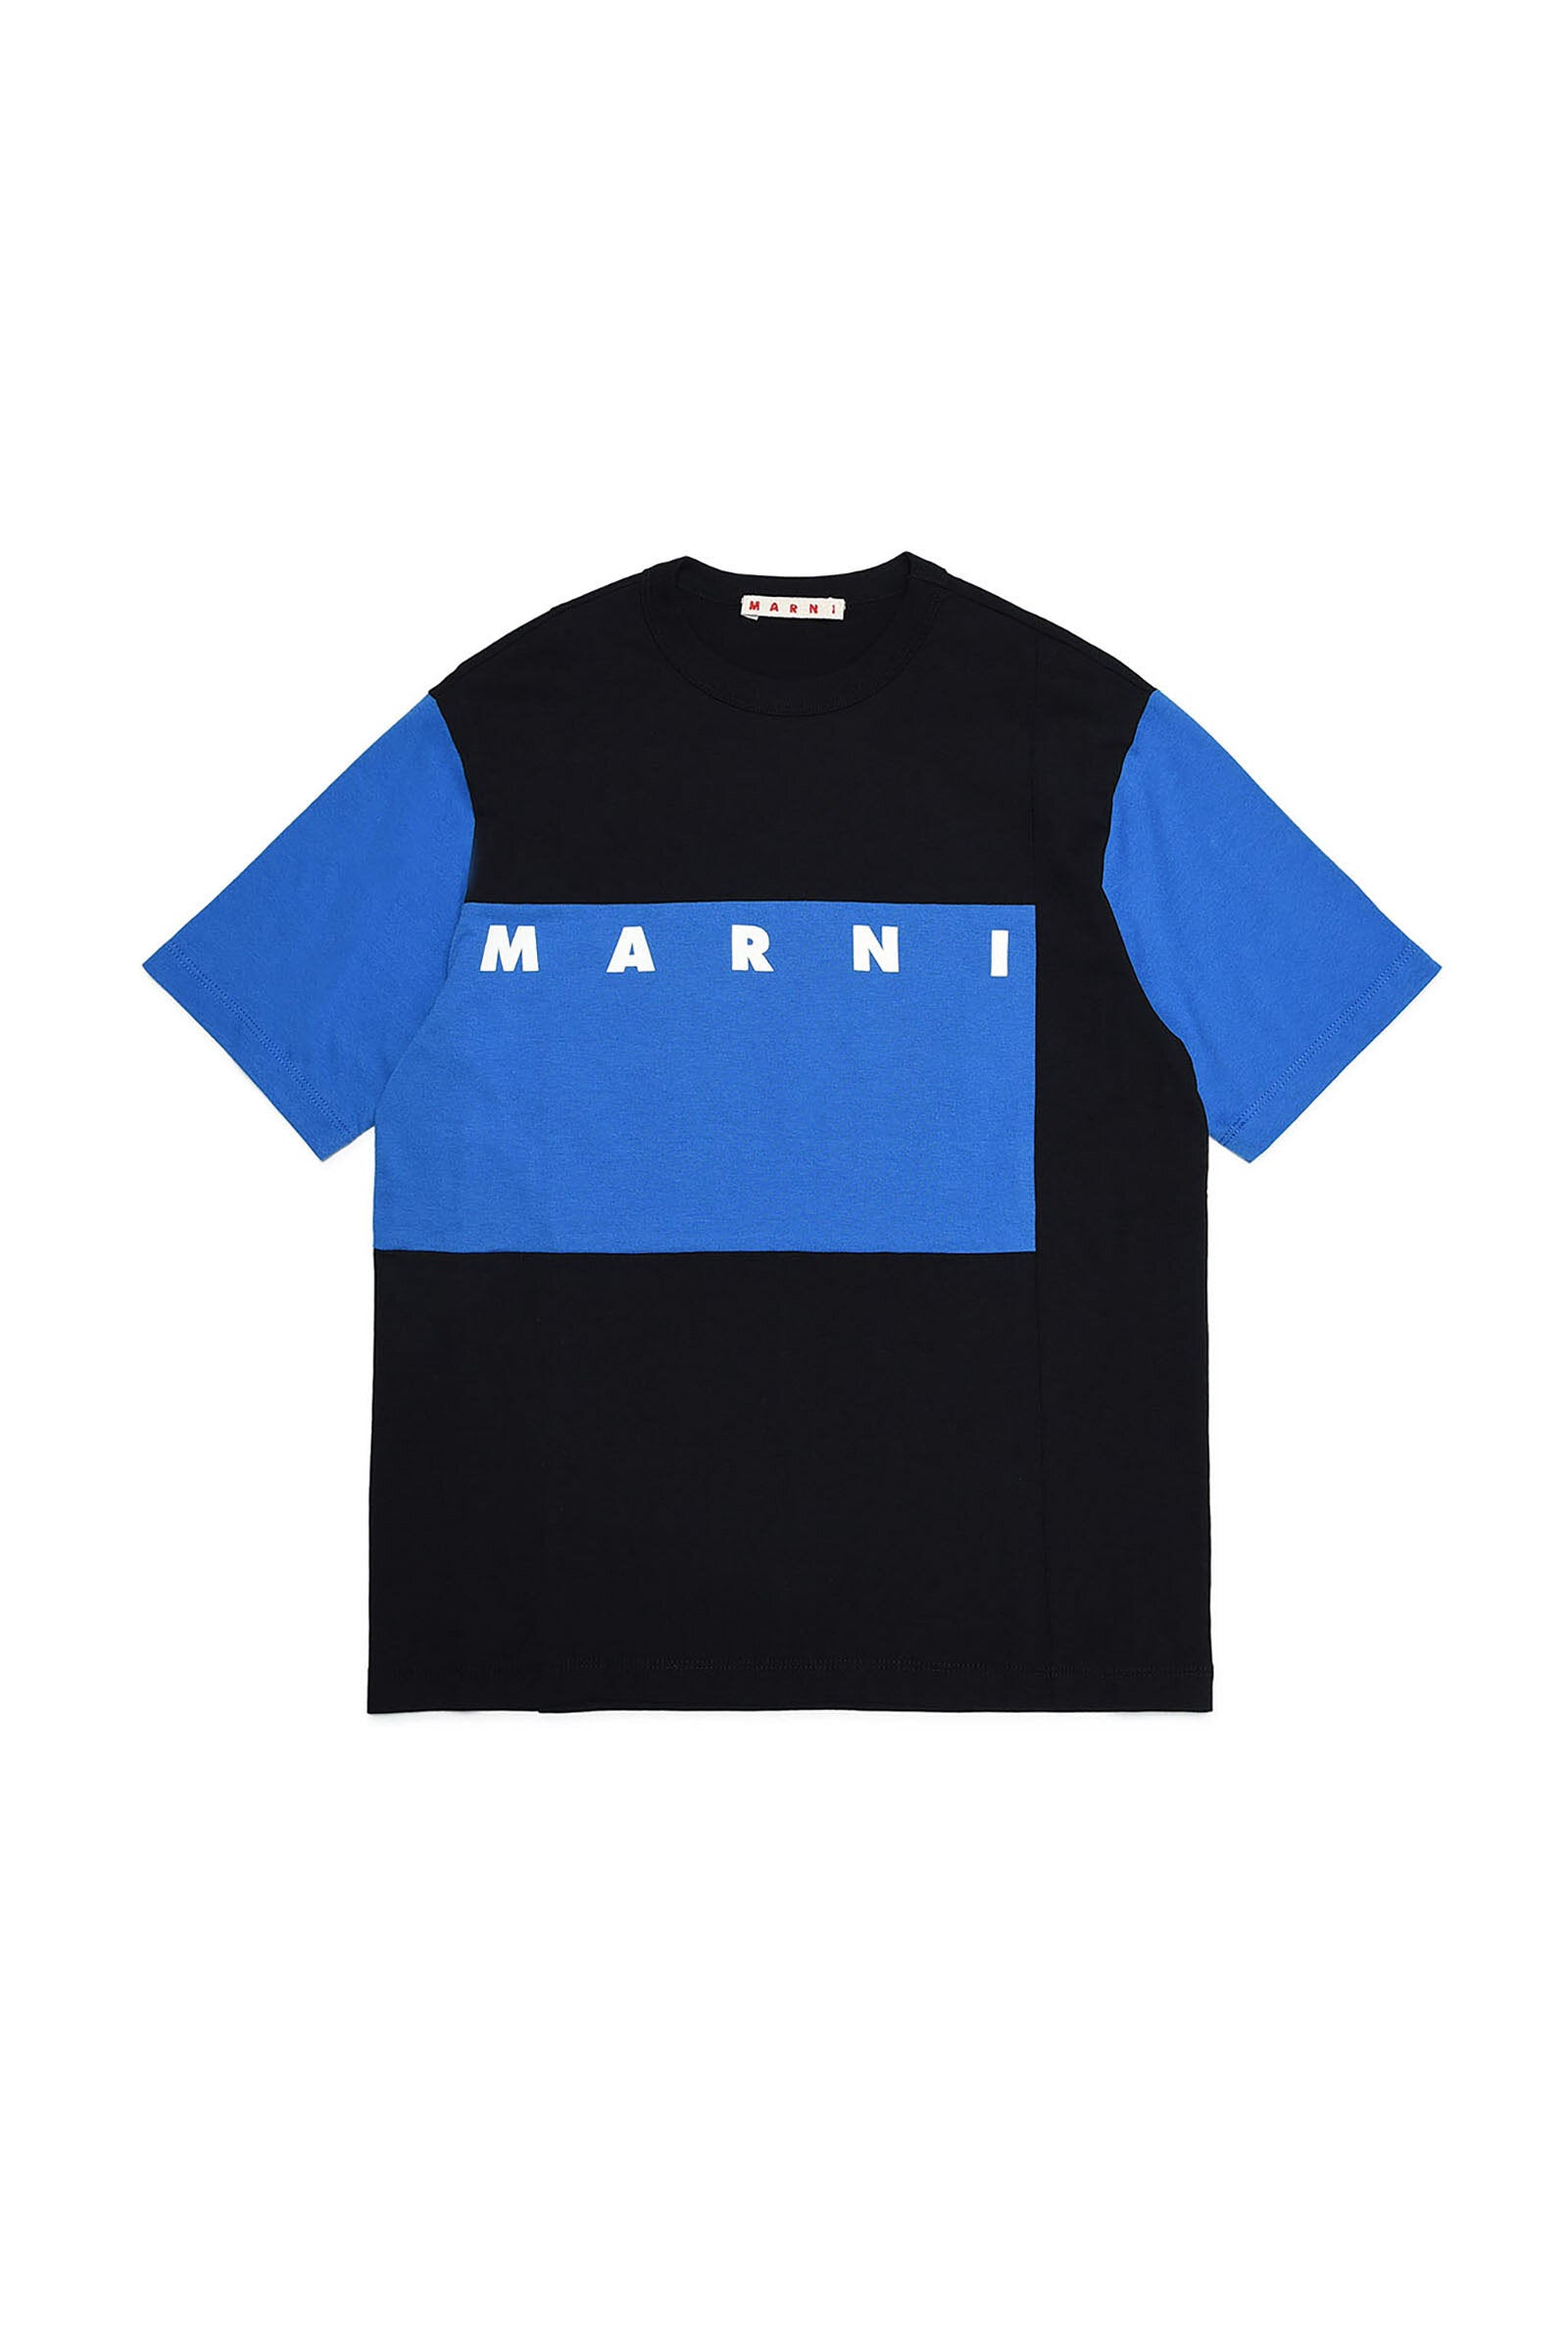 MARNI BLACK T-SHIRT WITH colourBLOCK INSERTS